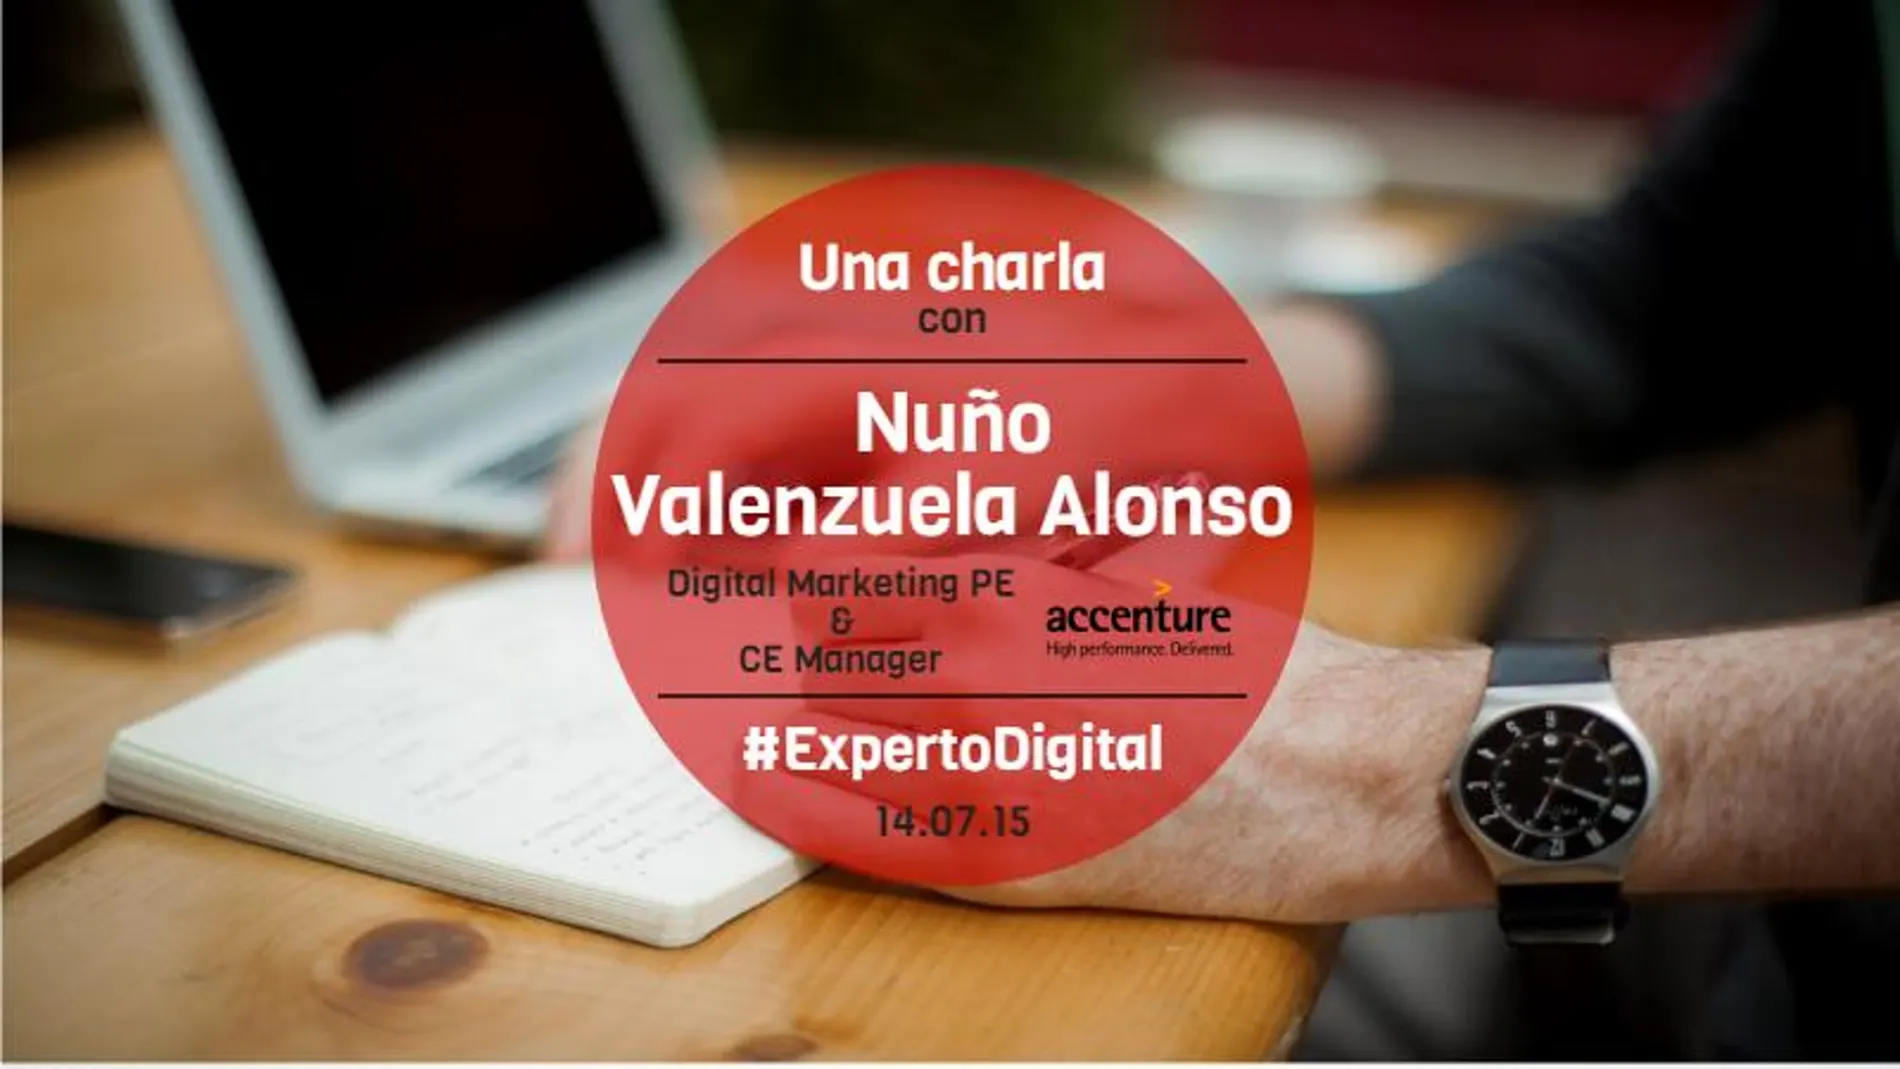 El experto digital: Nuño Valenzuela Alonso